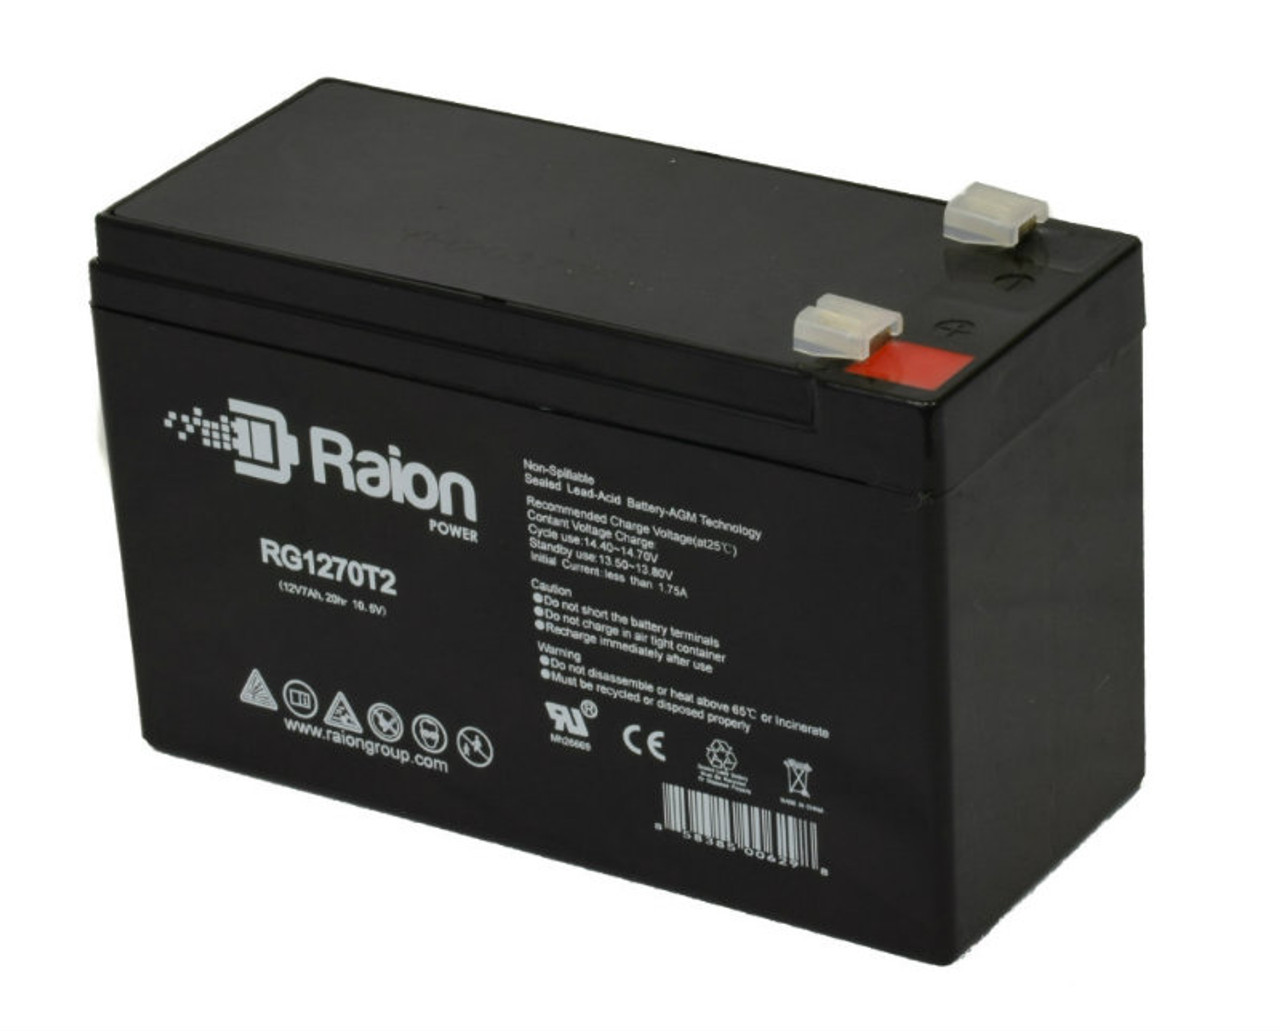 Raion Power RG1270T1 12V 7Ah Non-Spillable Replacement Battery for Medi-Man Rehabilitation Products Patient Lift 5000